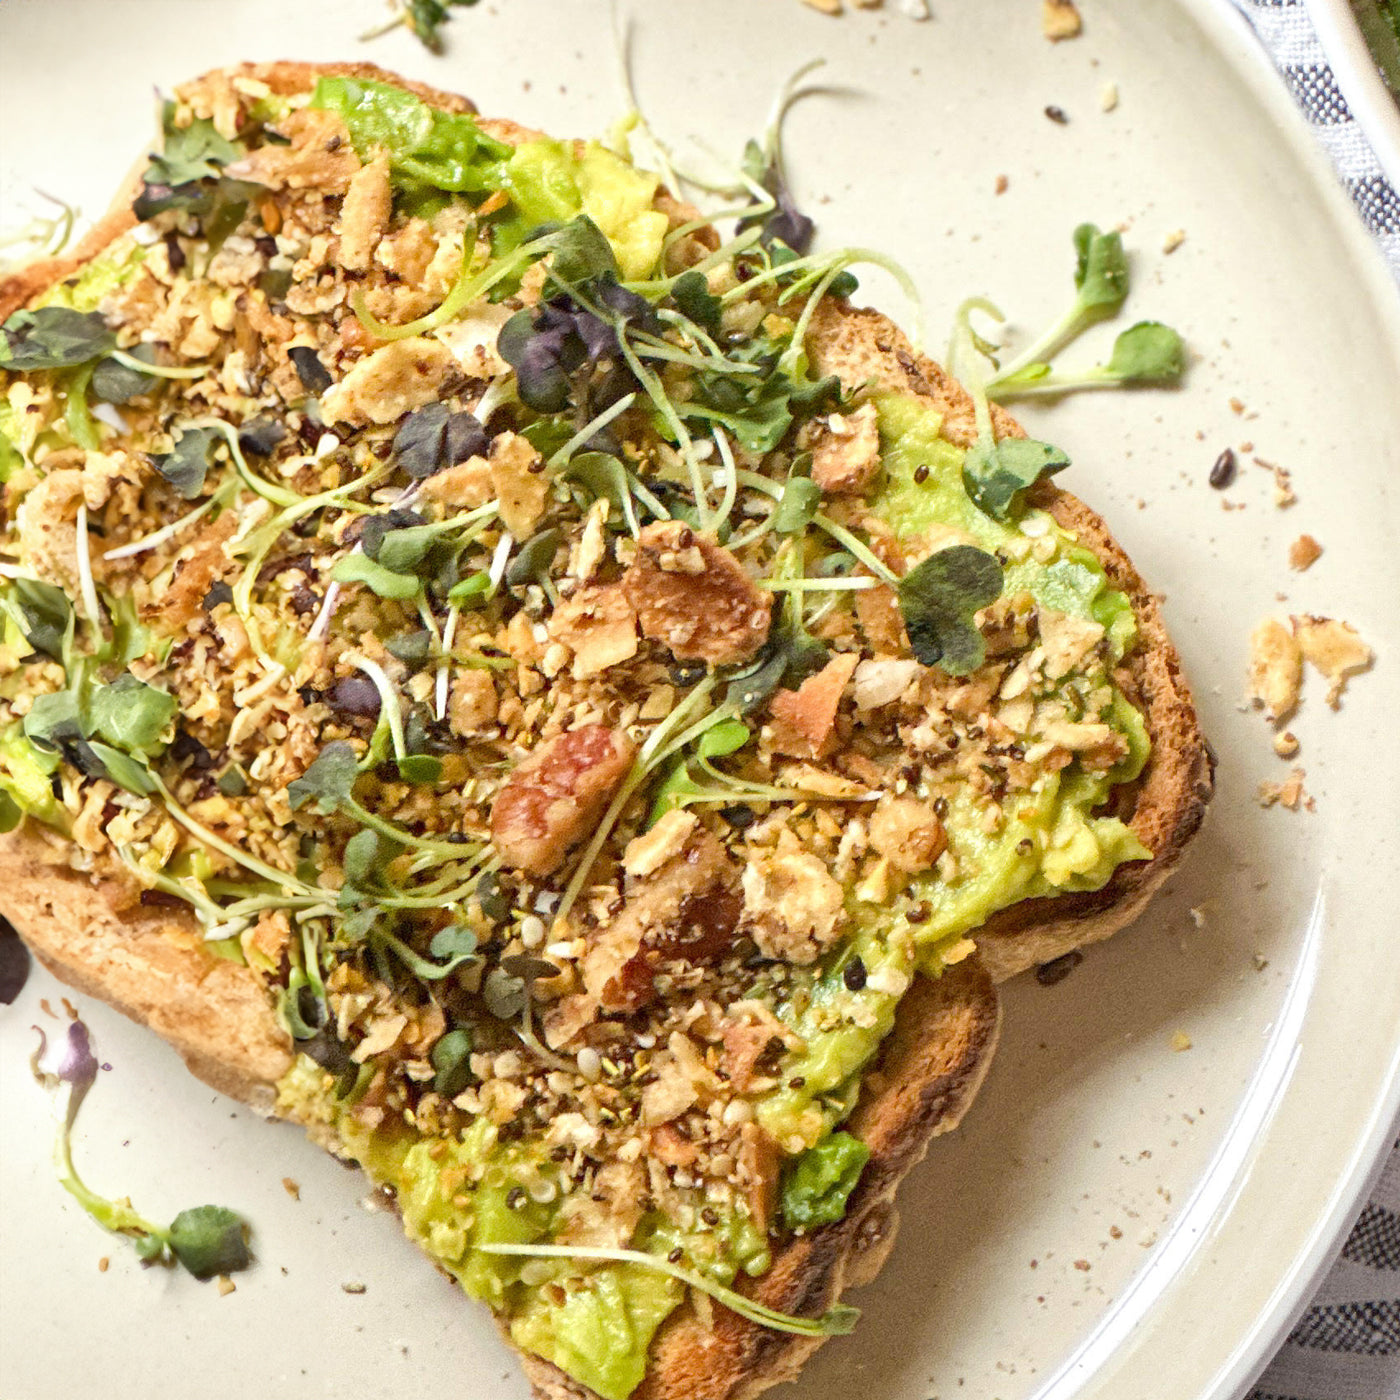 Avocado toast with microgreens and Struesli granola